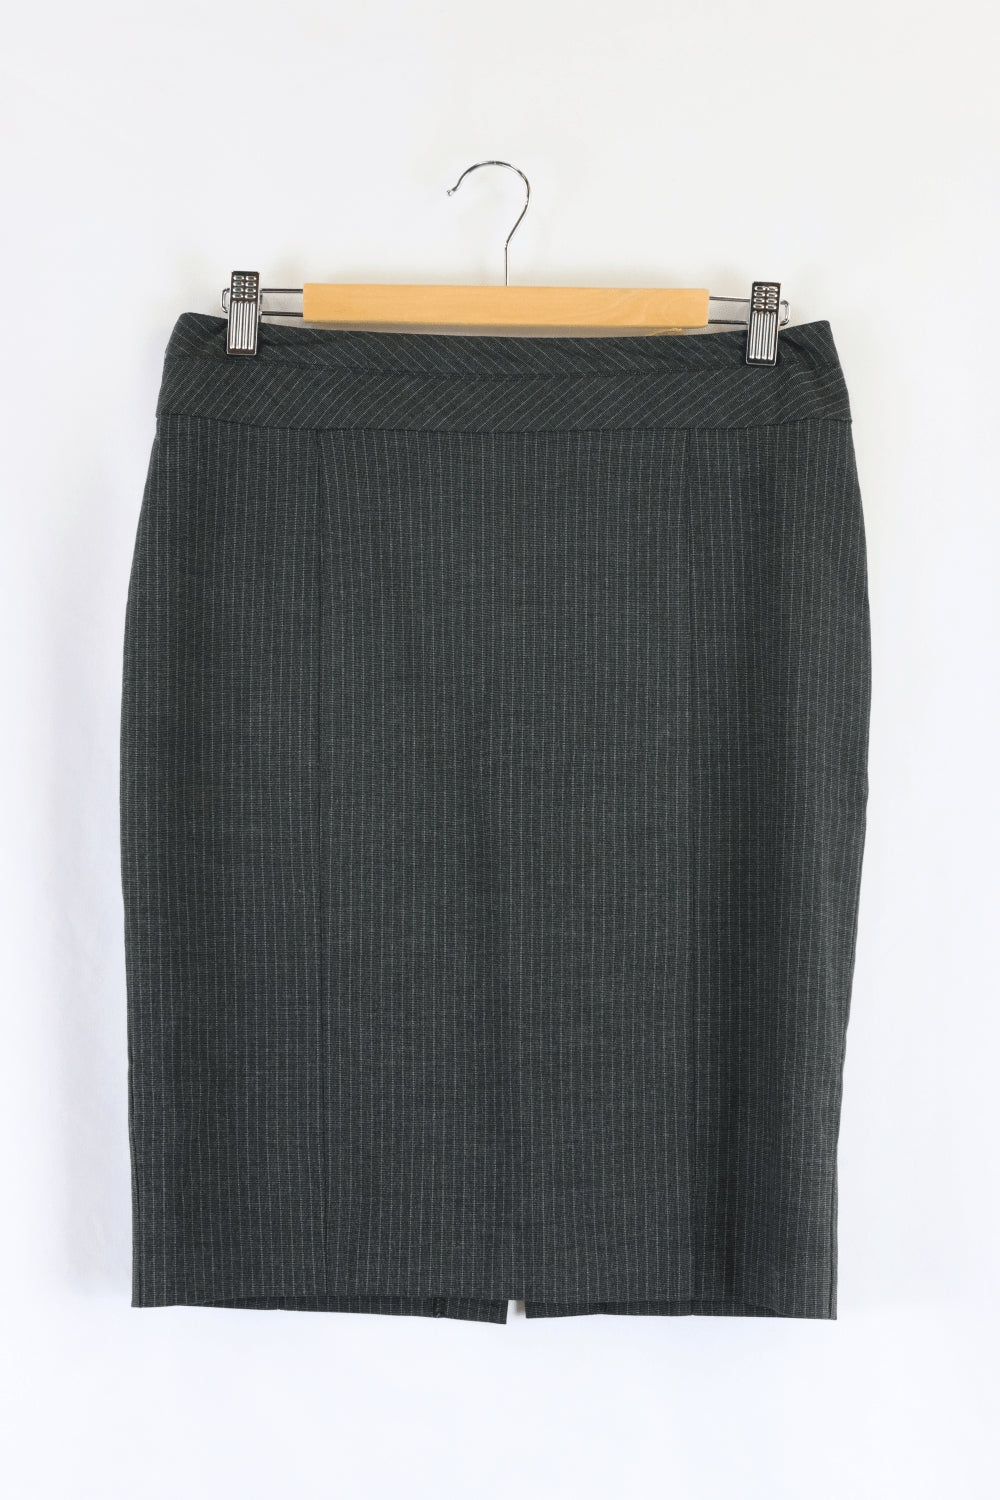 Portmans Grey Pencil Skirt 10